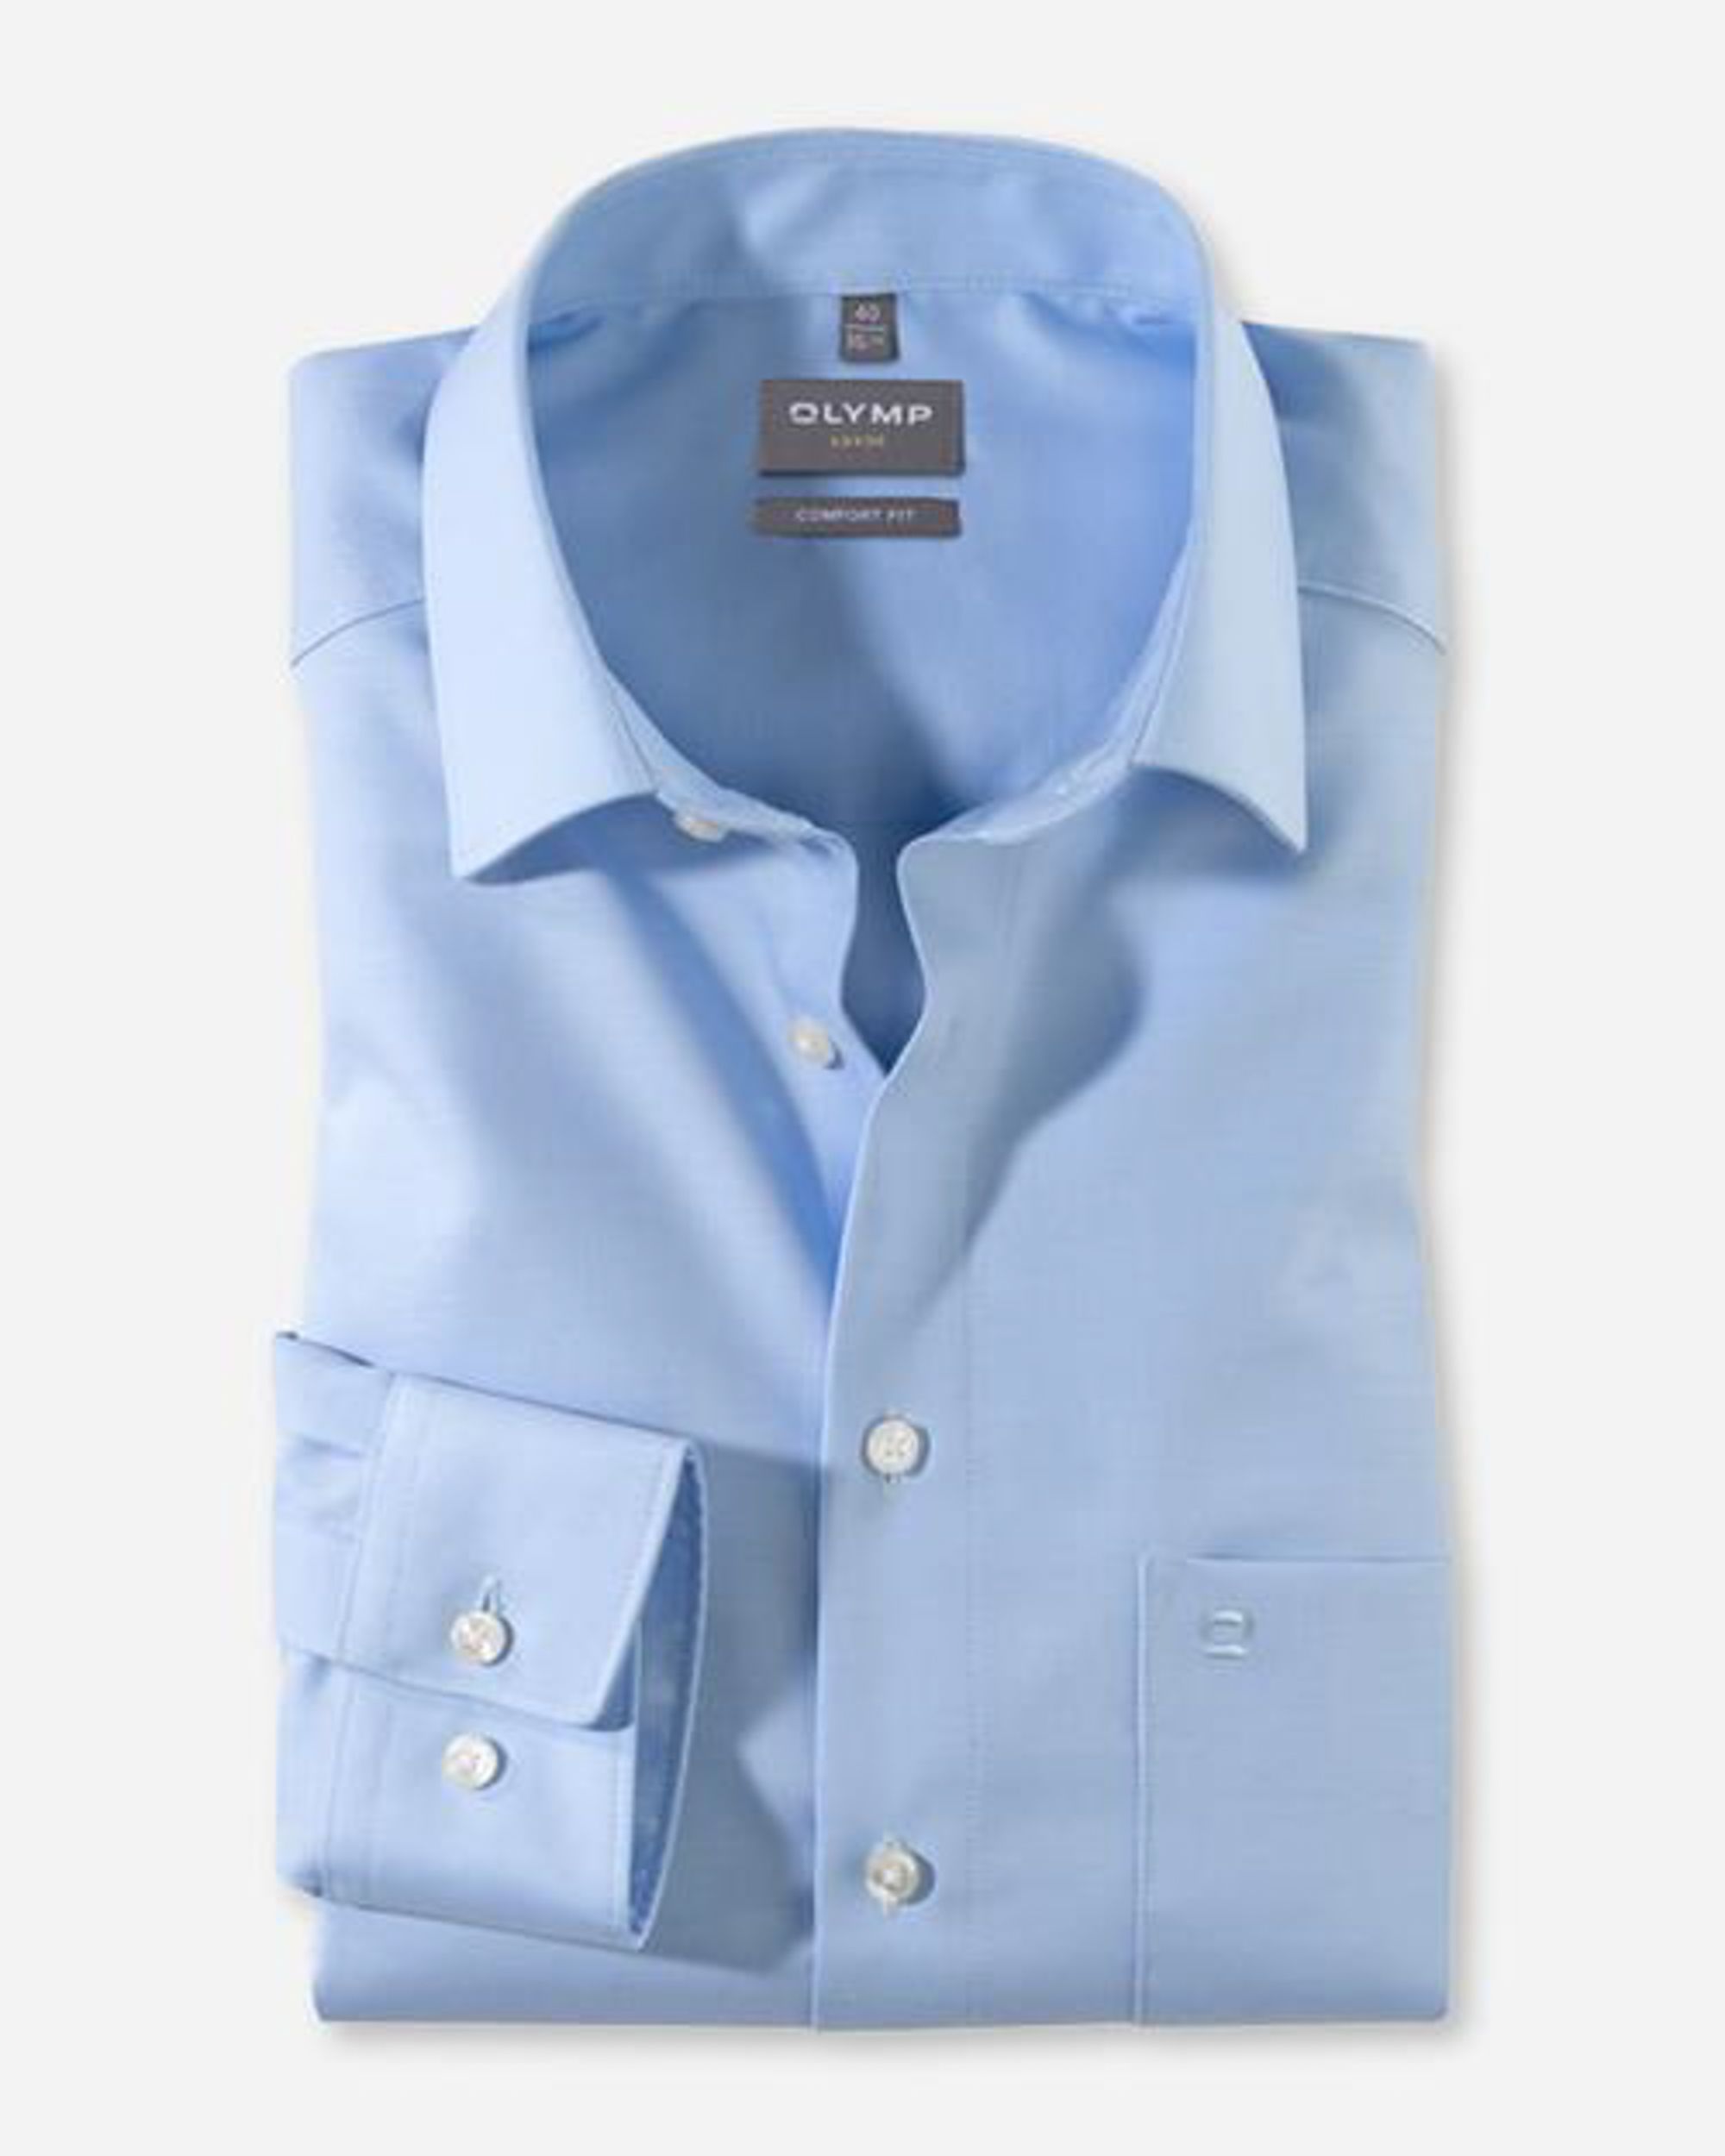 OLYMP Luxor Comfort Fit Overhemd LM Blauw 064653-001-39